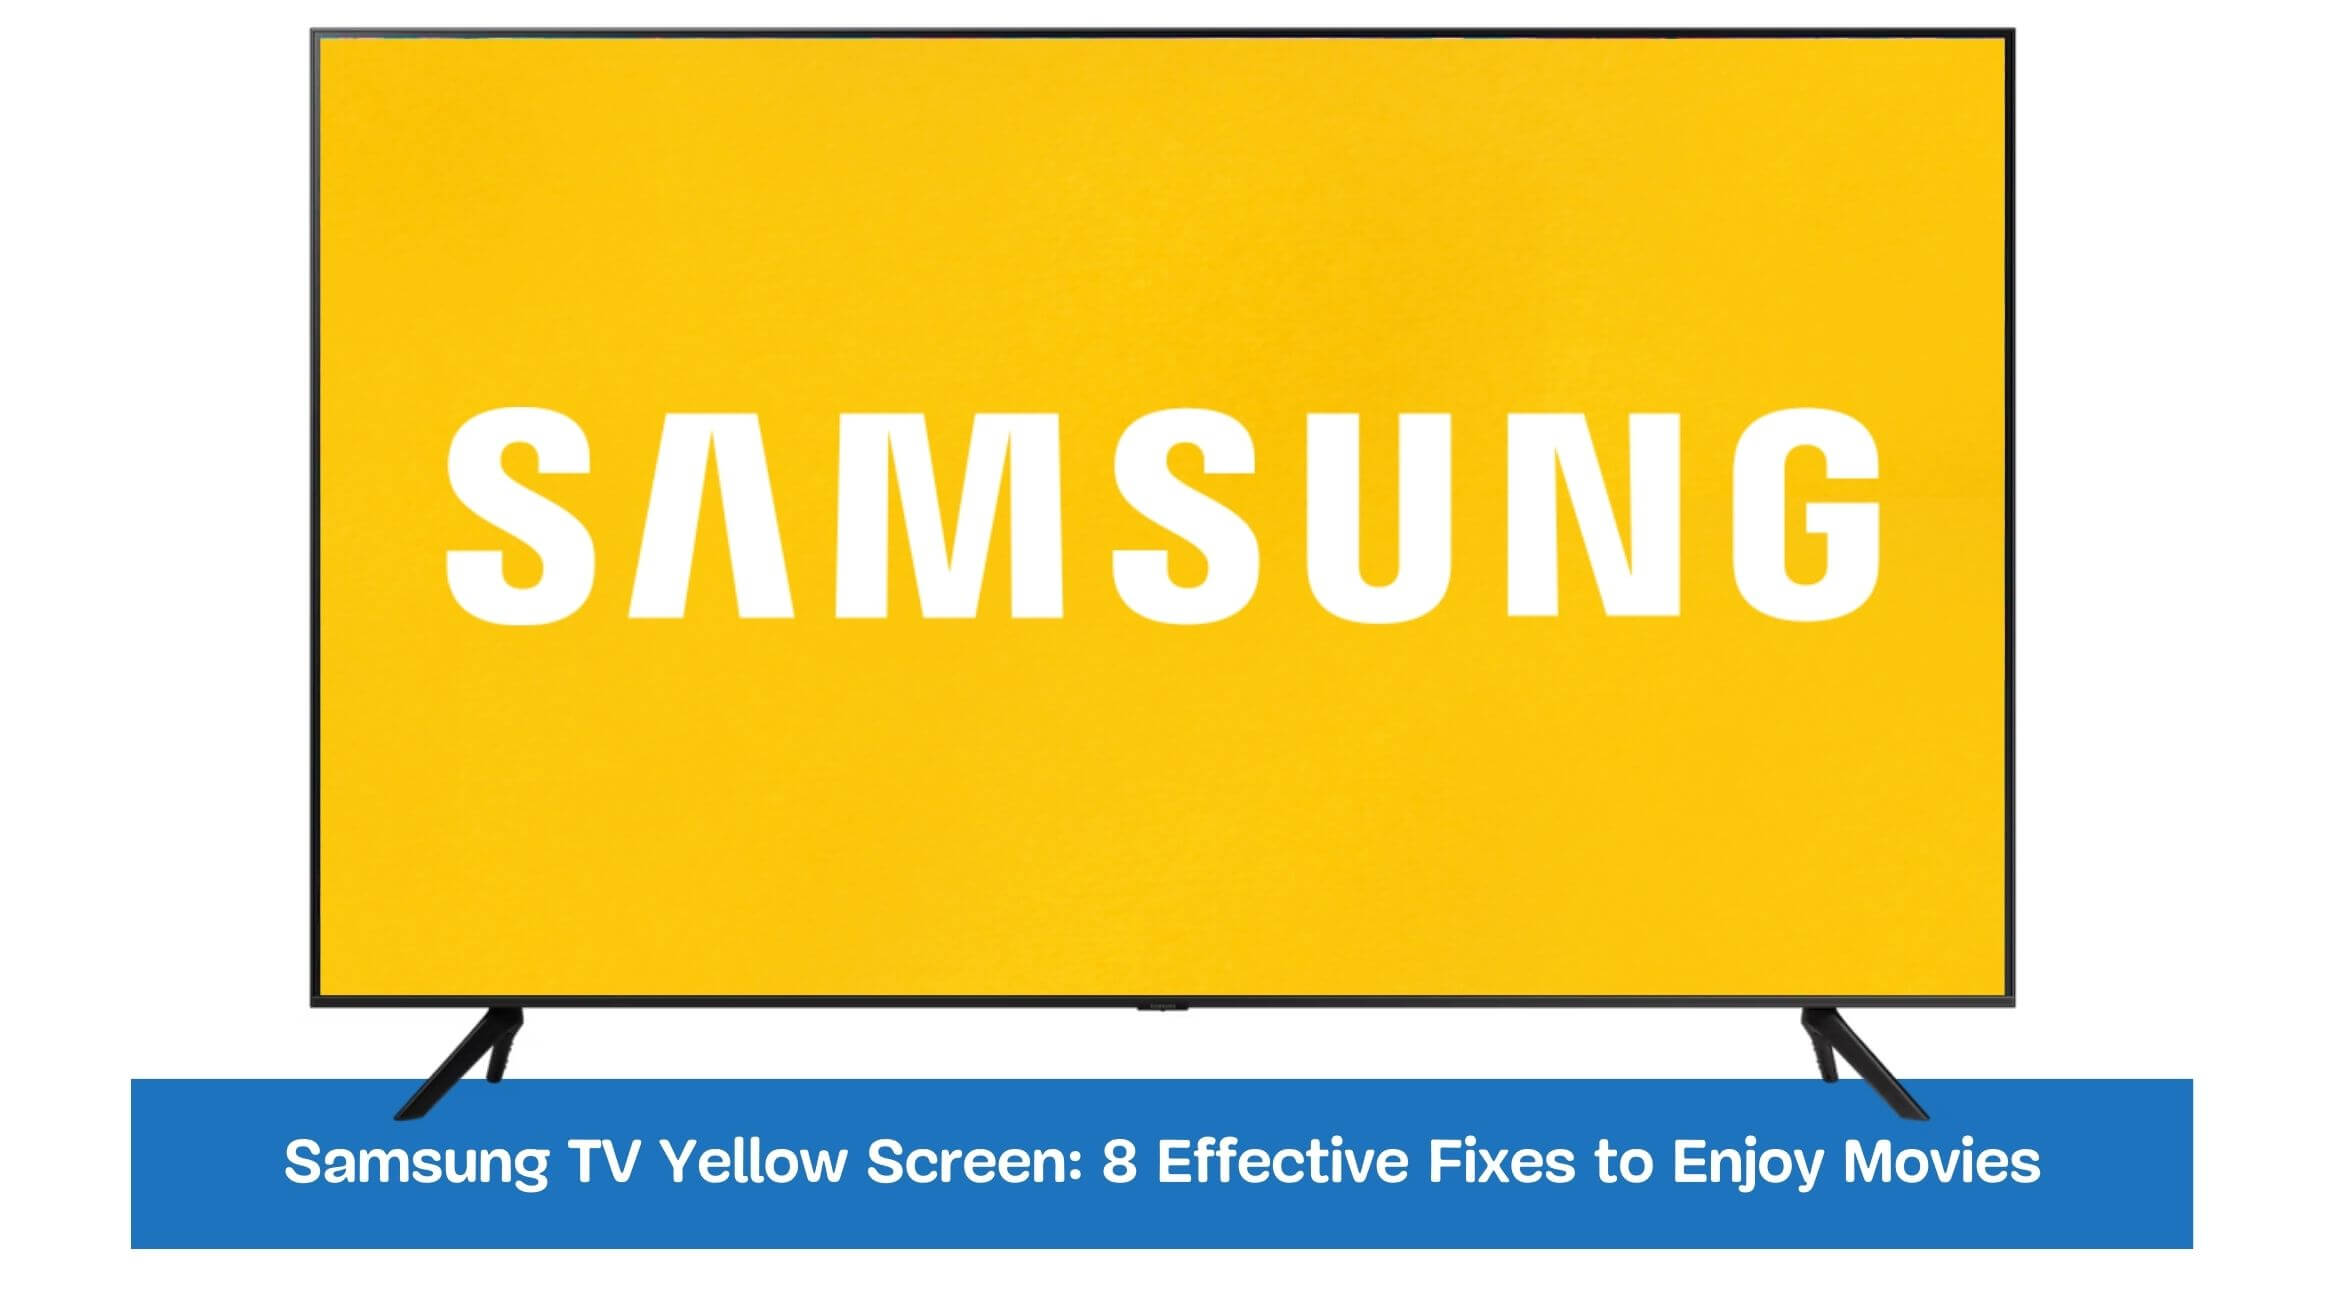 Samsung TV Yellow Screen: 8 Effective Fixes to Enjoy Movies